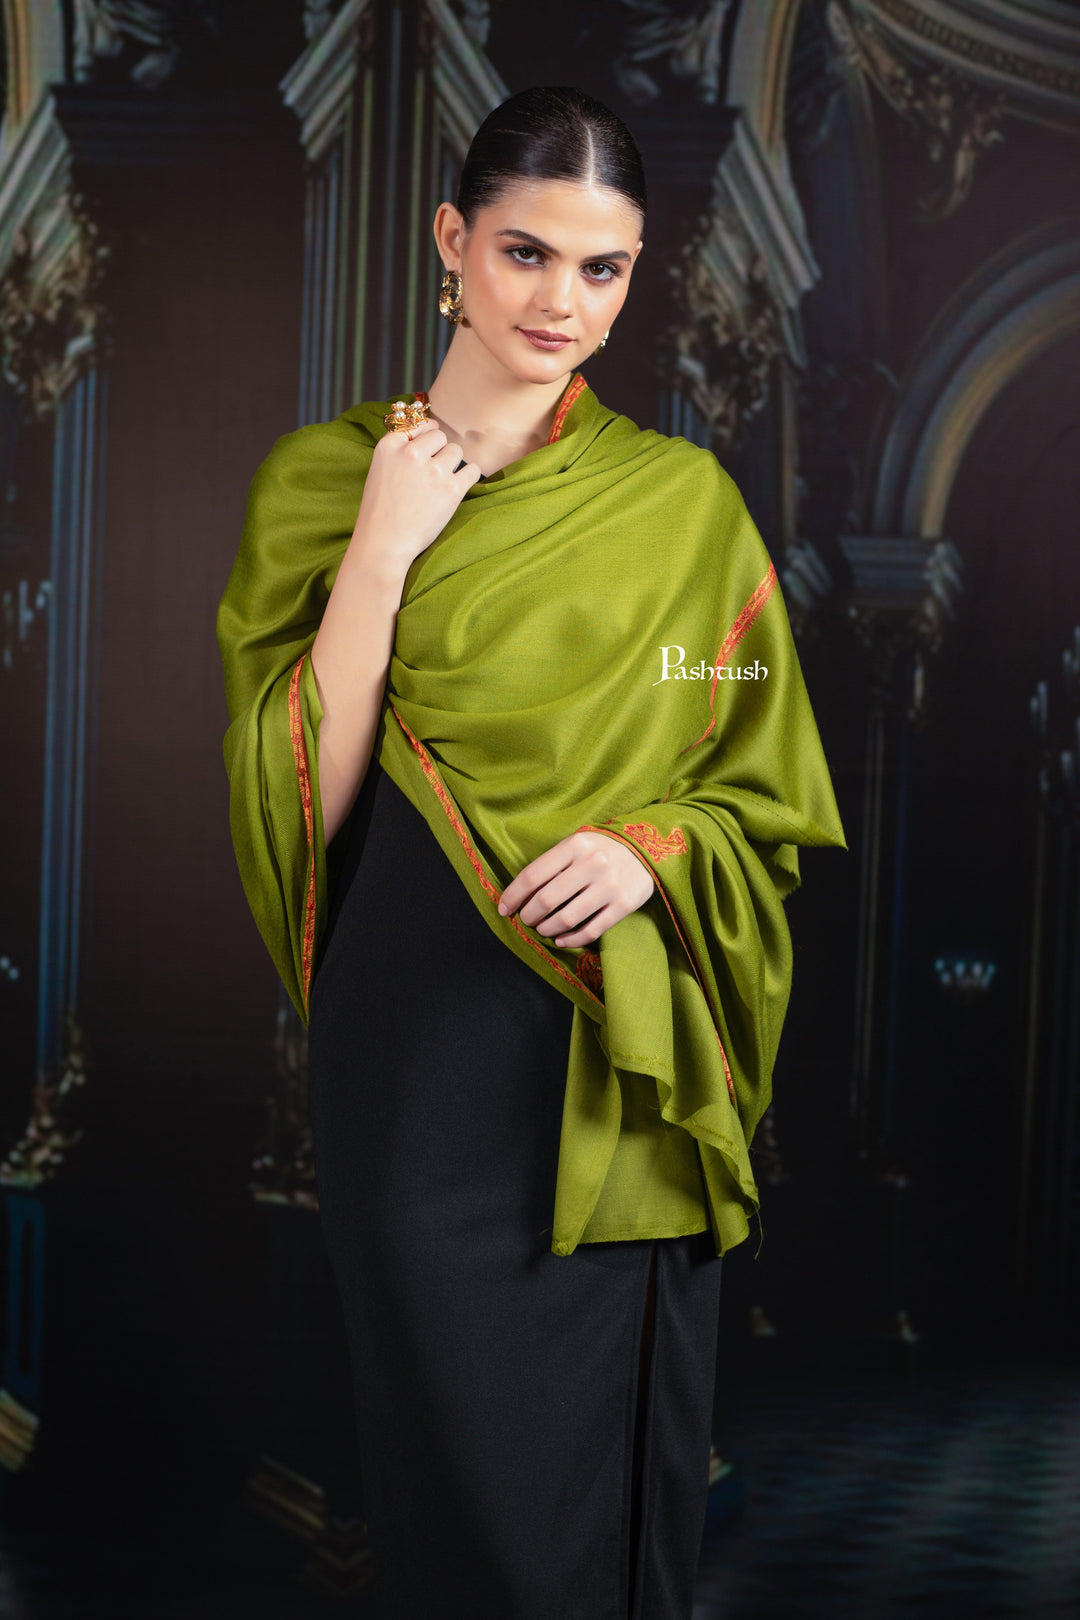 Pashtush India Womens Shawls Pashtush Womens Fine Wool Shawl, Hand Embroidered Kingri Design, Emerald Green